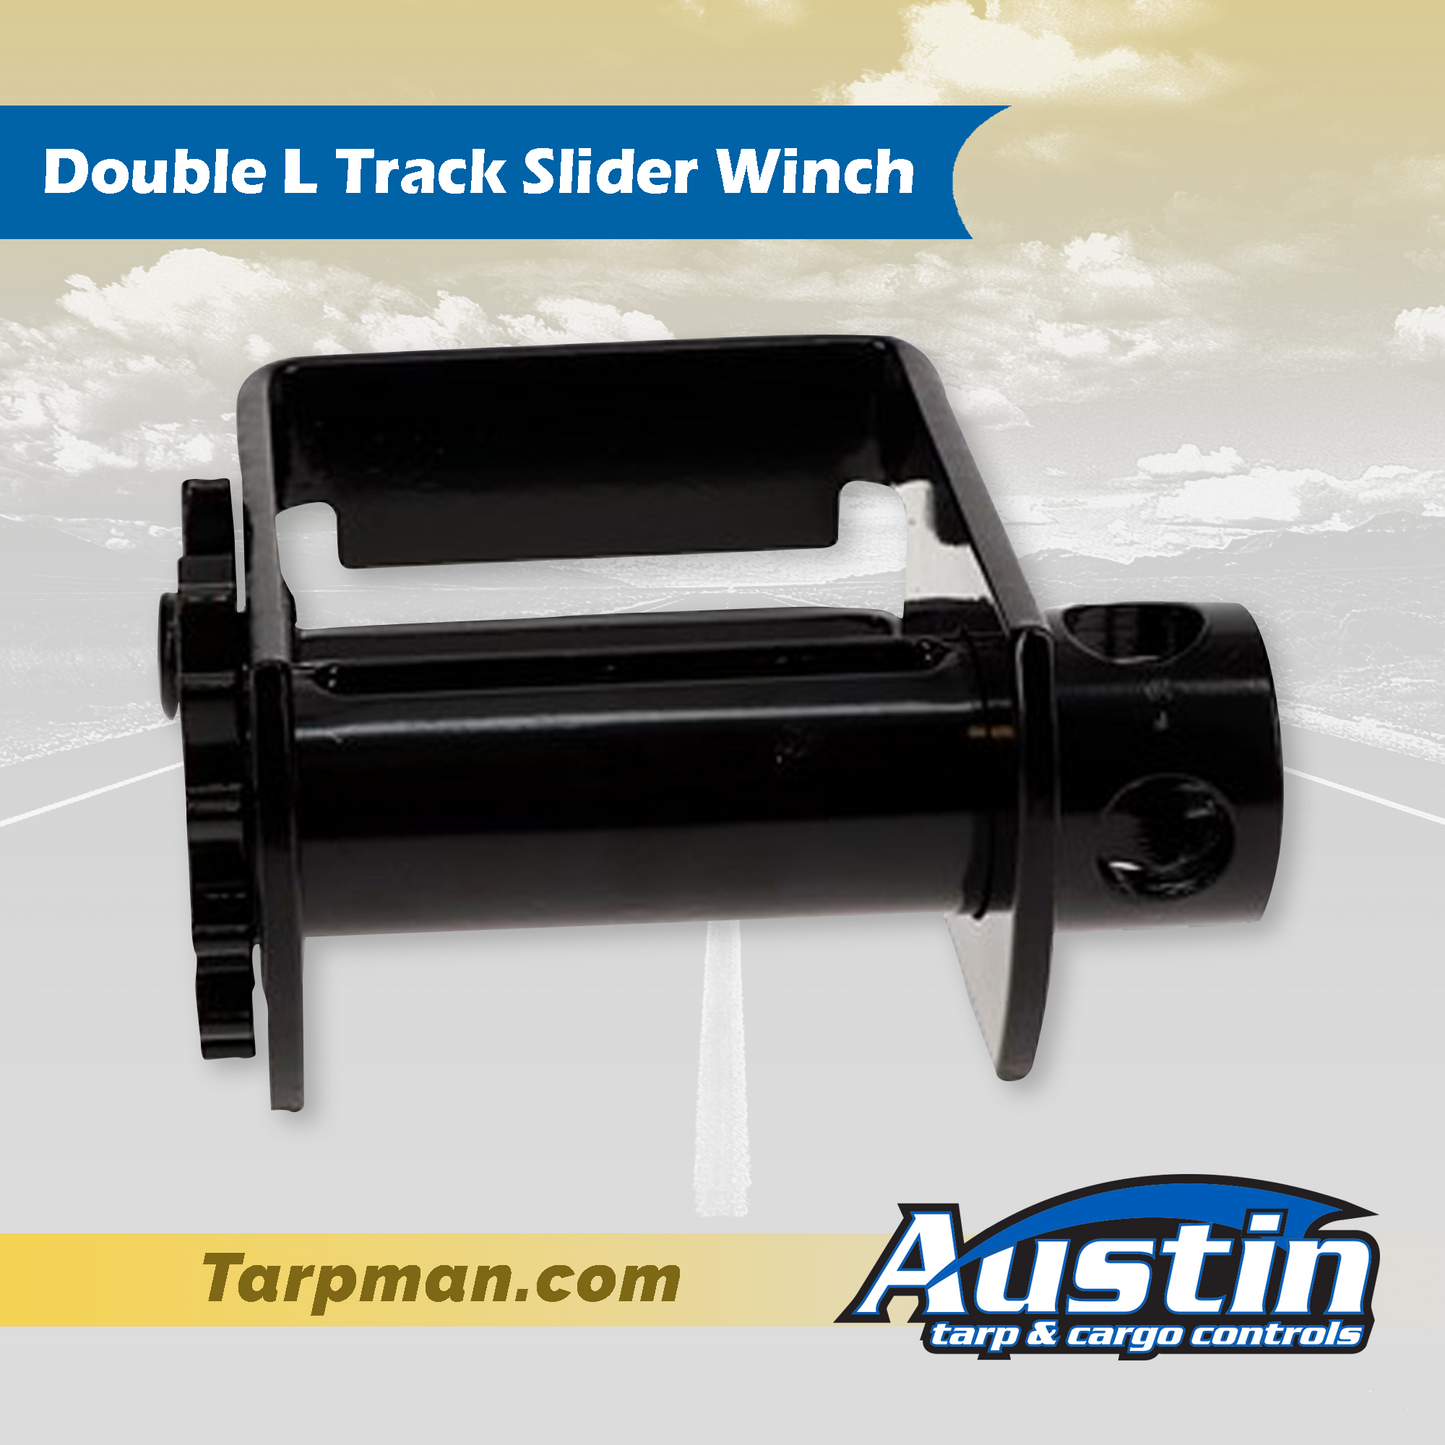 Double L Track Slider Winch